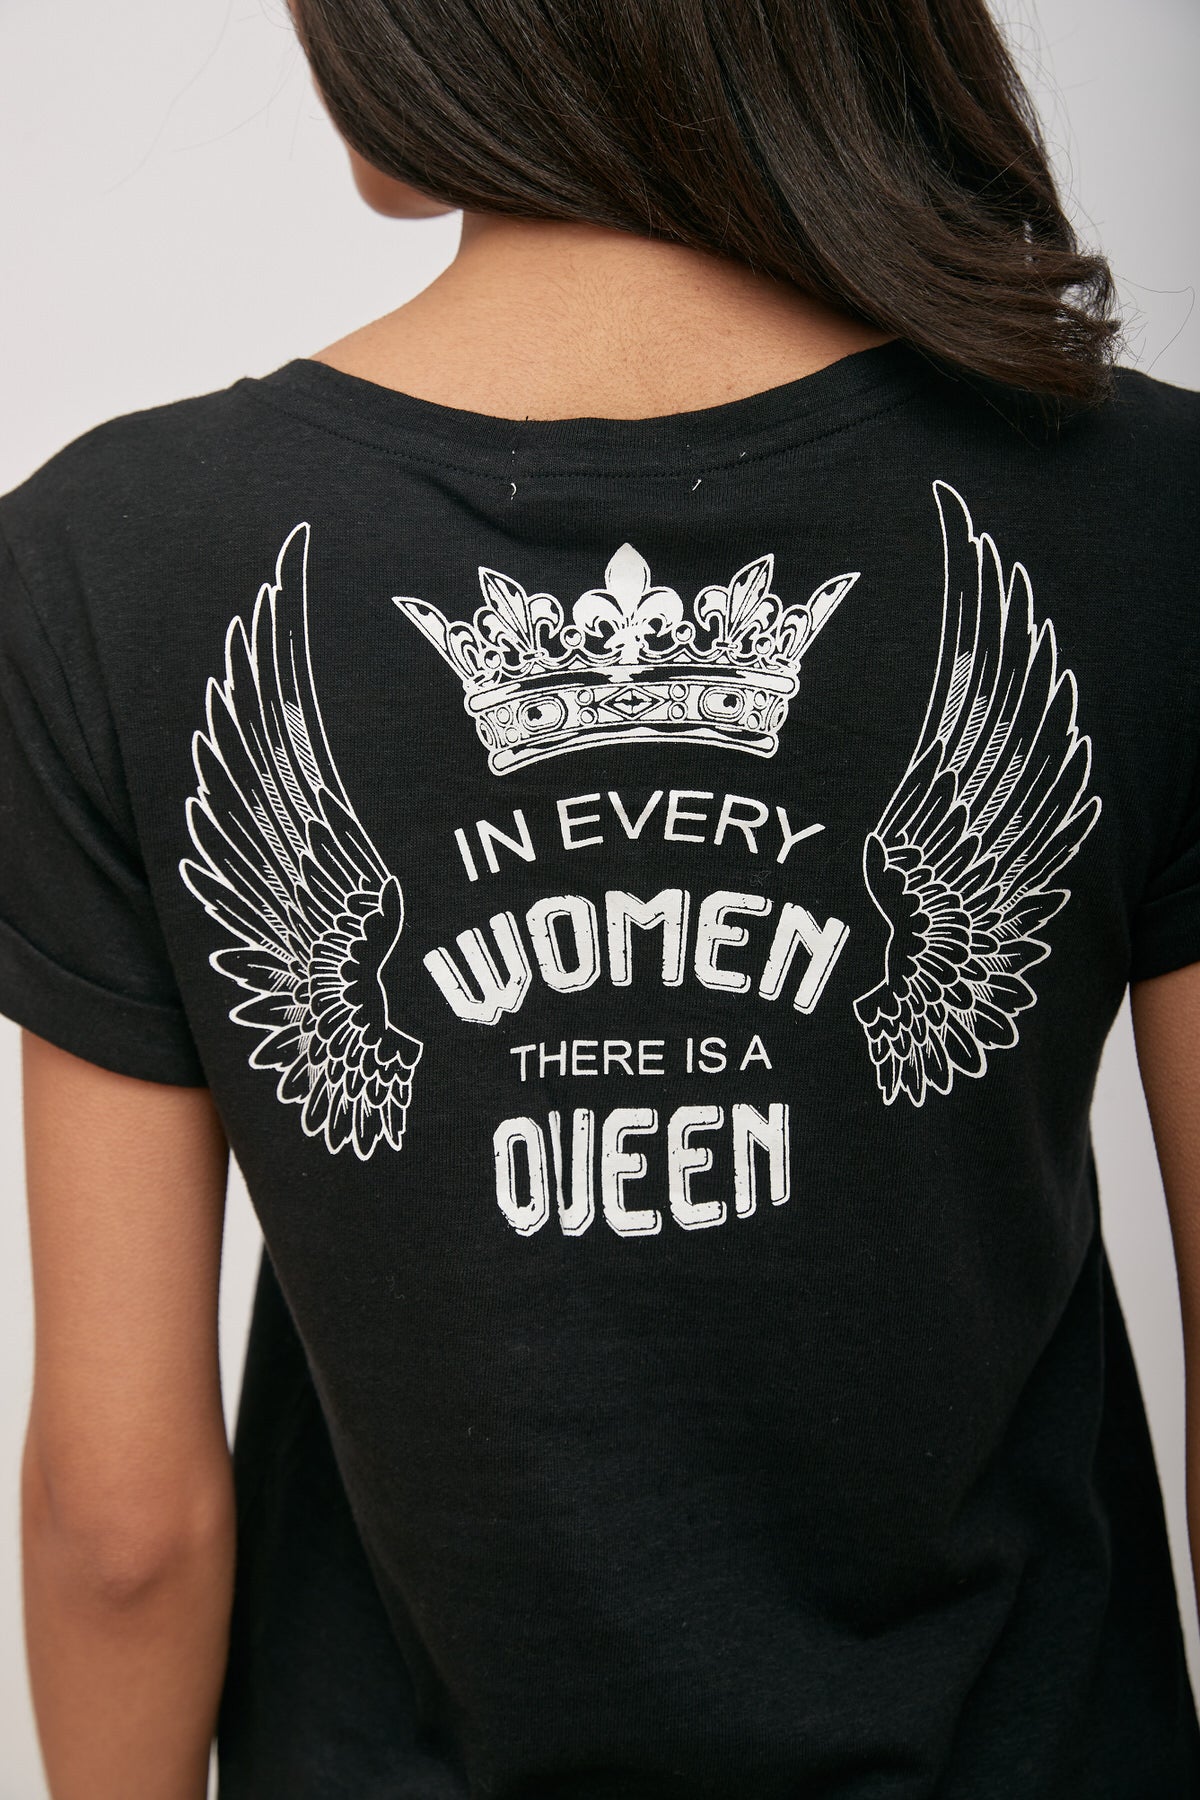 T-shirt en lin - Woman Queen